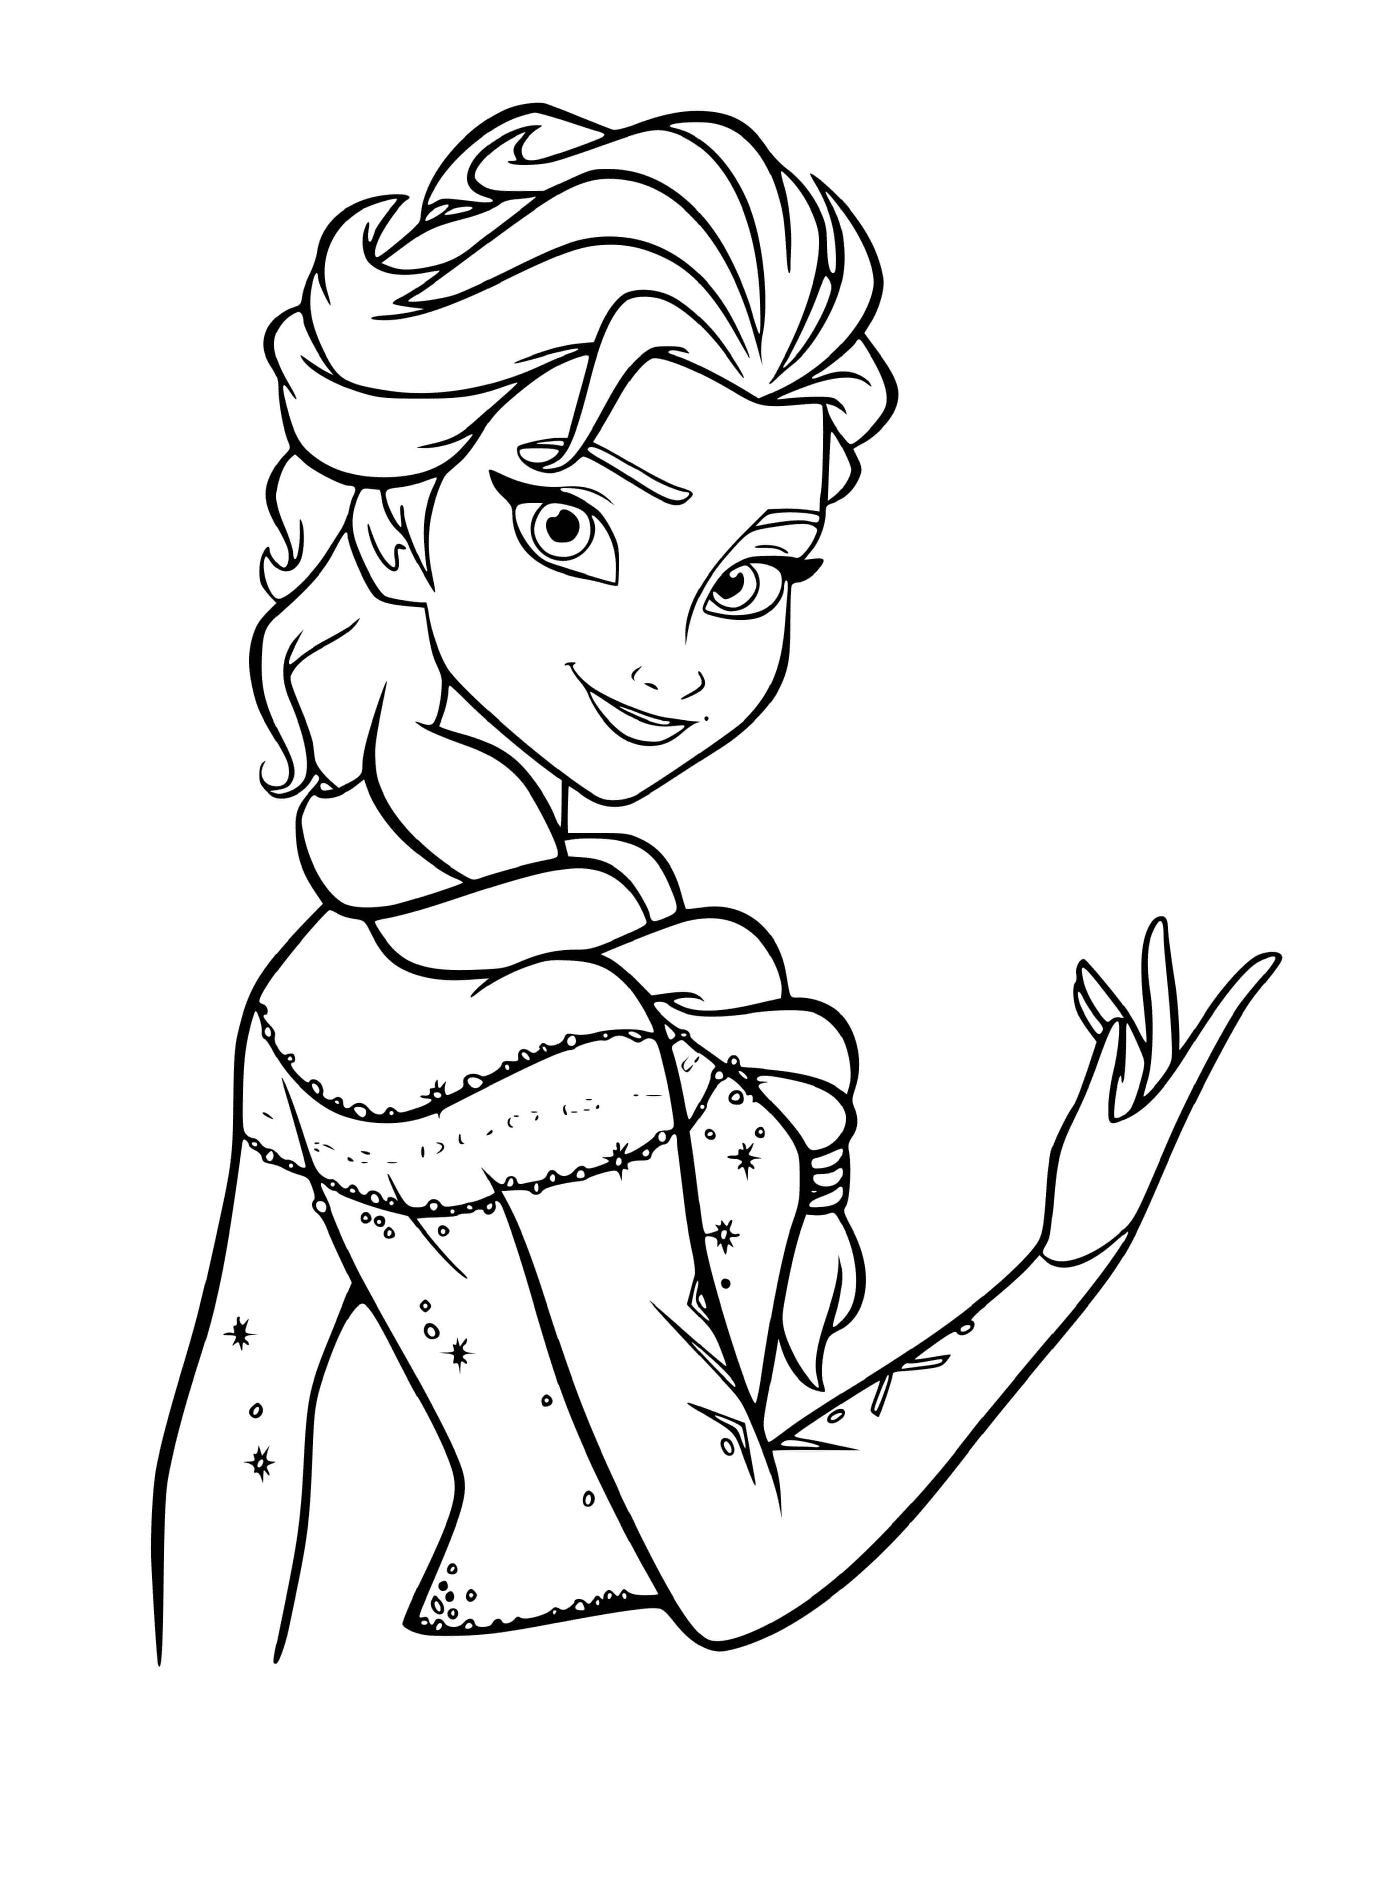  Elsa de la Reina de las Nieves 